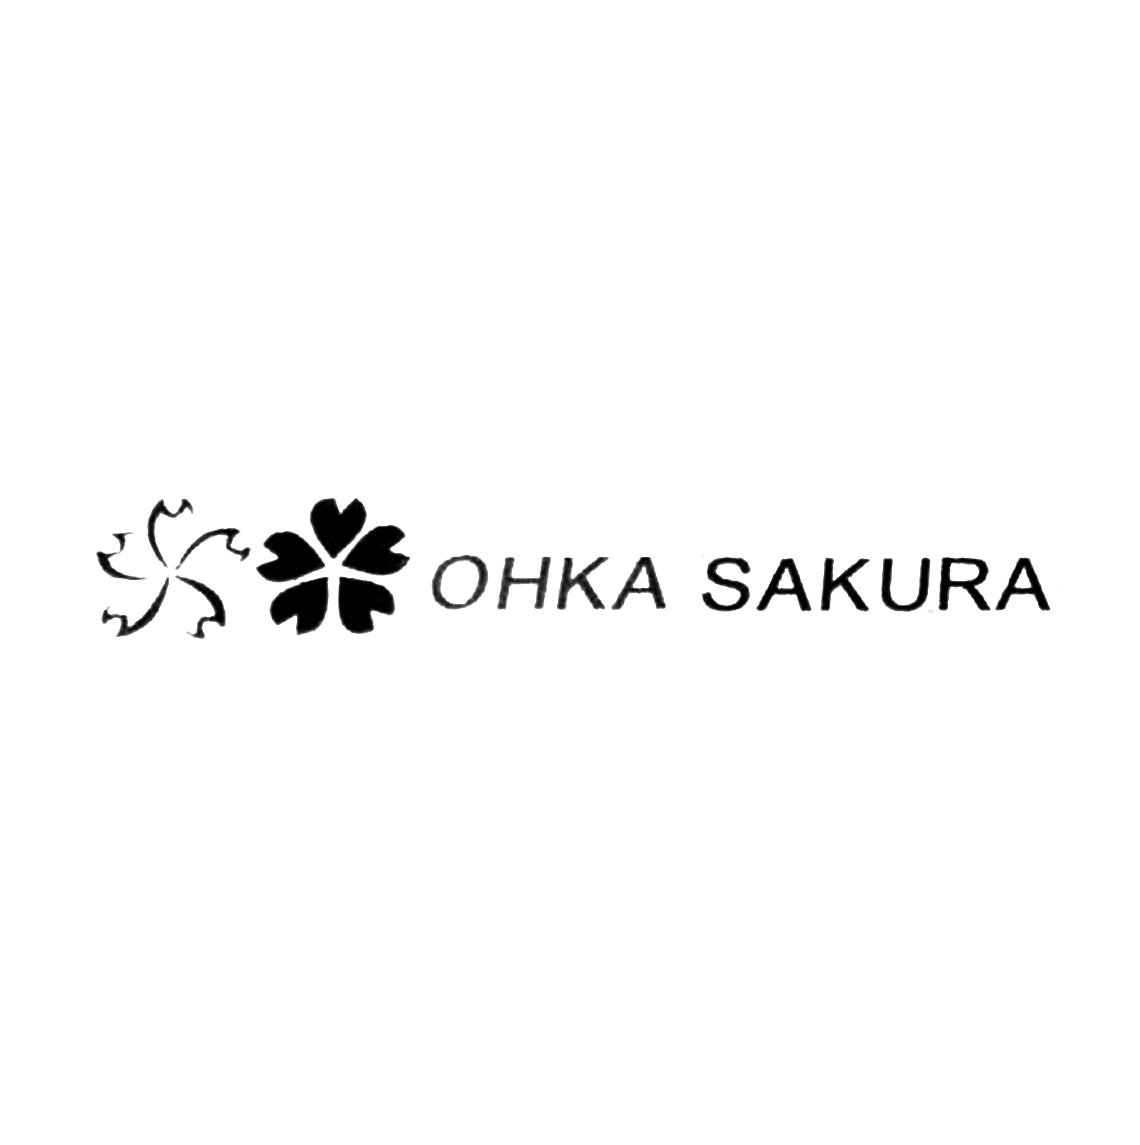 OHKA SAKURAlogo